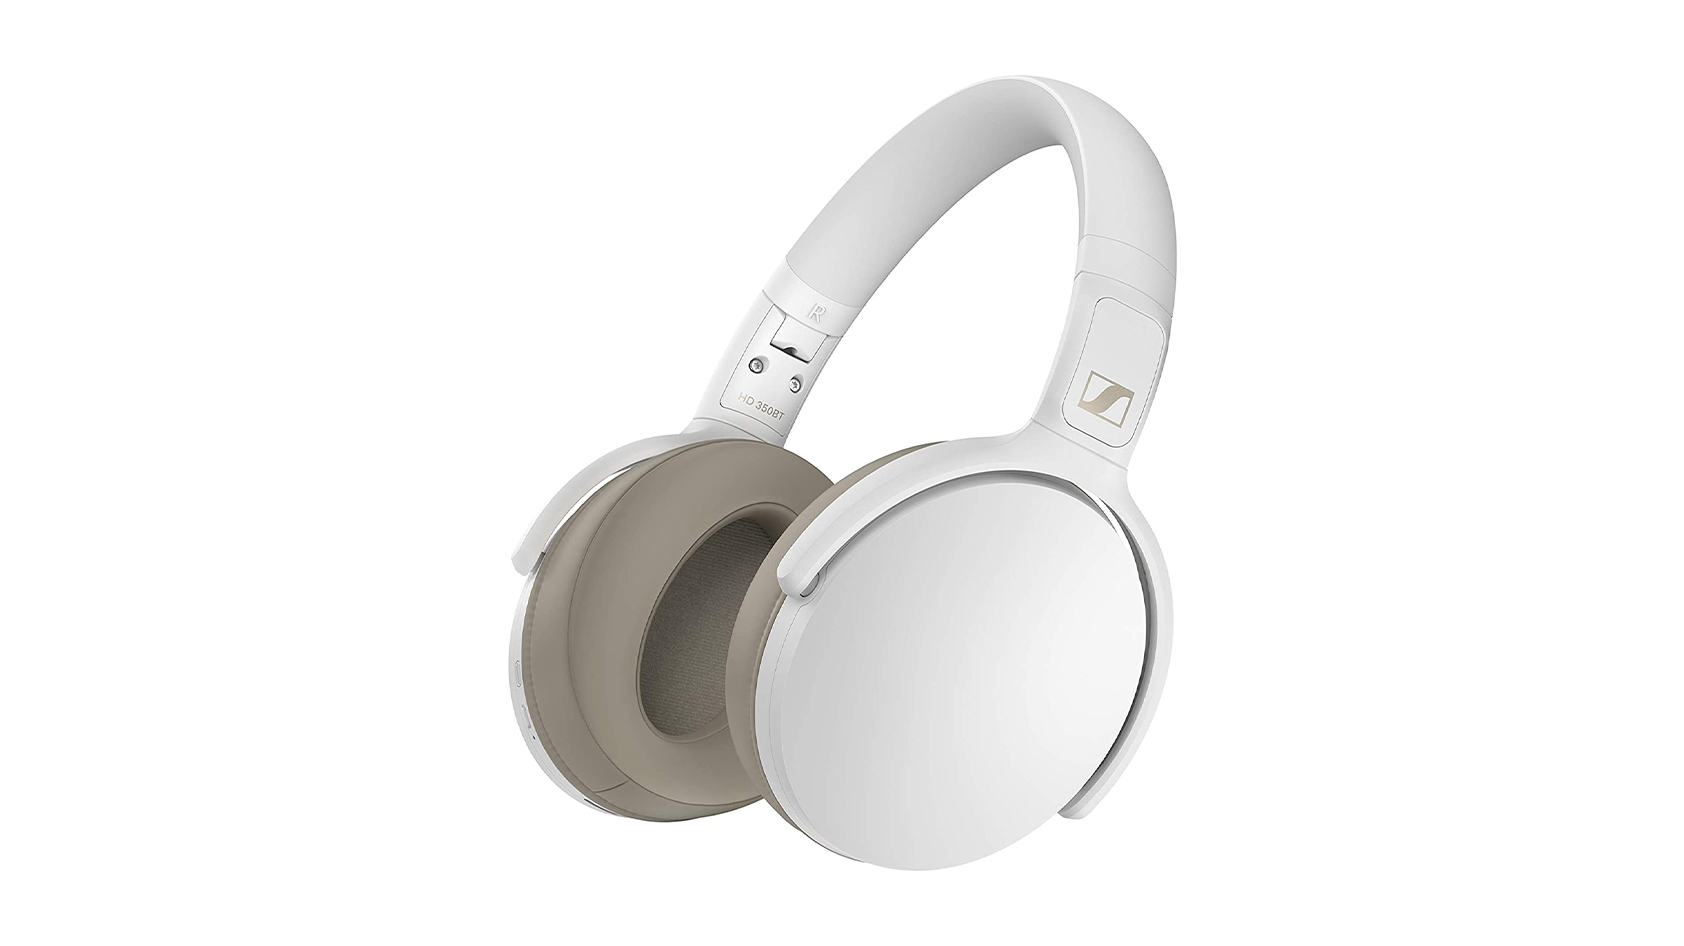 The Sennheiser HD 350BT headphones in white against a white background.